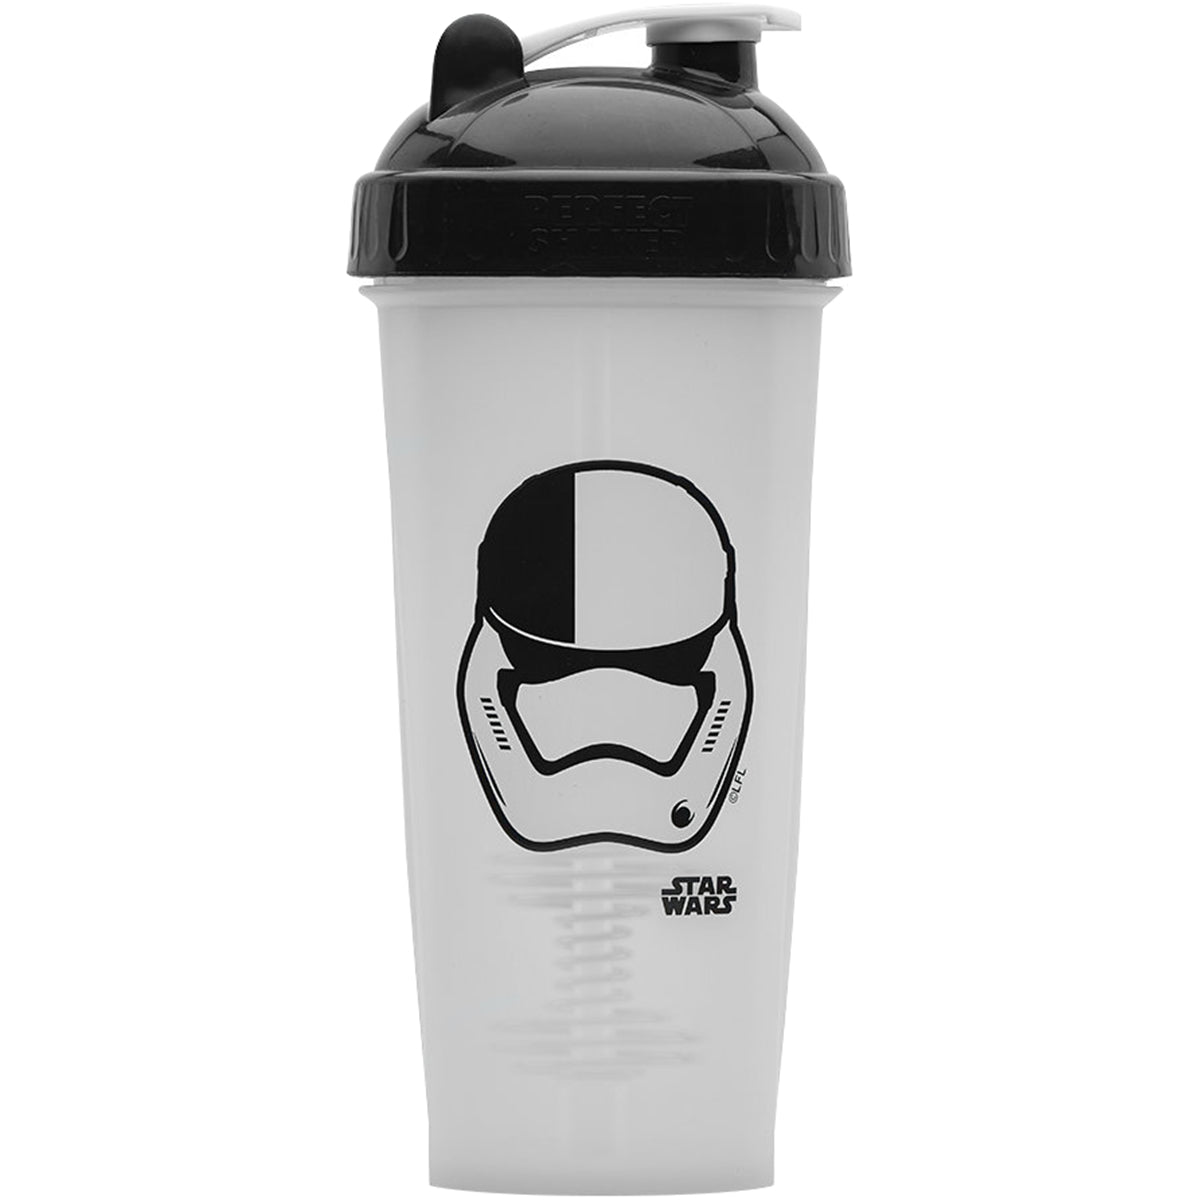 Performa PerfectShaker 28 oz. Star Wars Shaker Bottle - Executioner Stormtrooper PerfectShaker